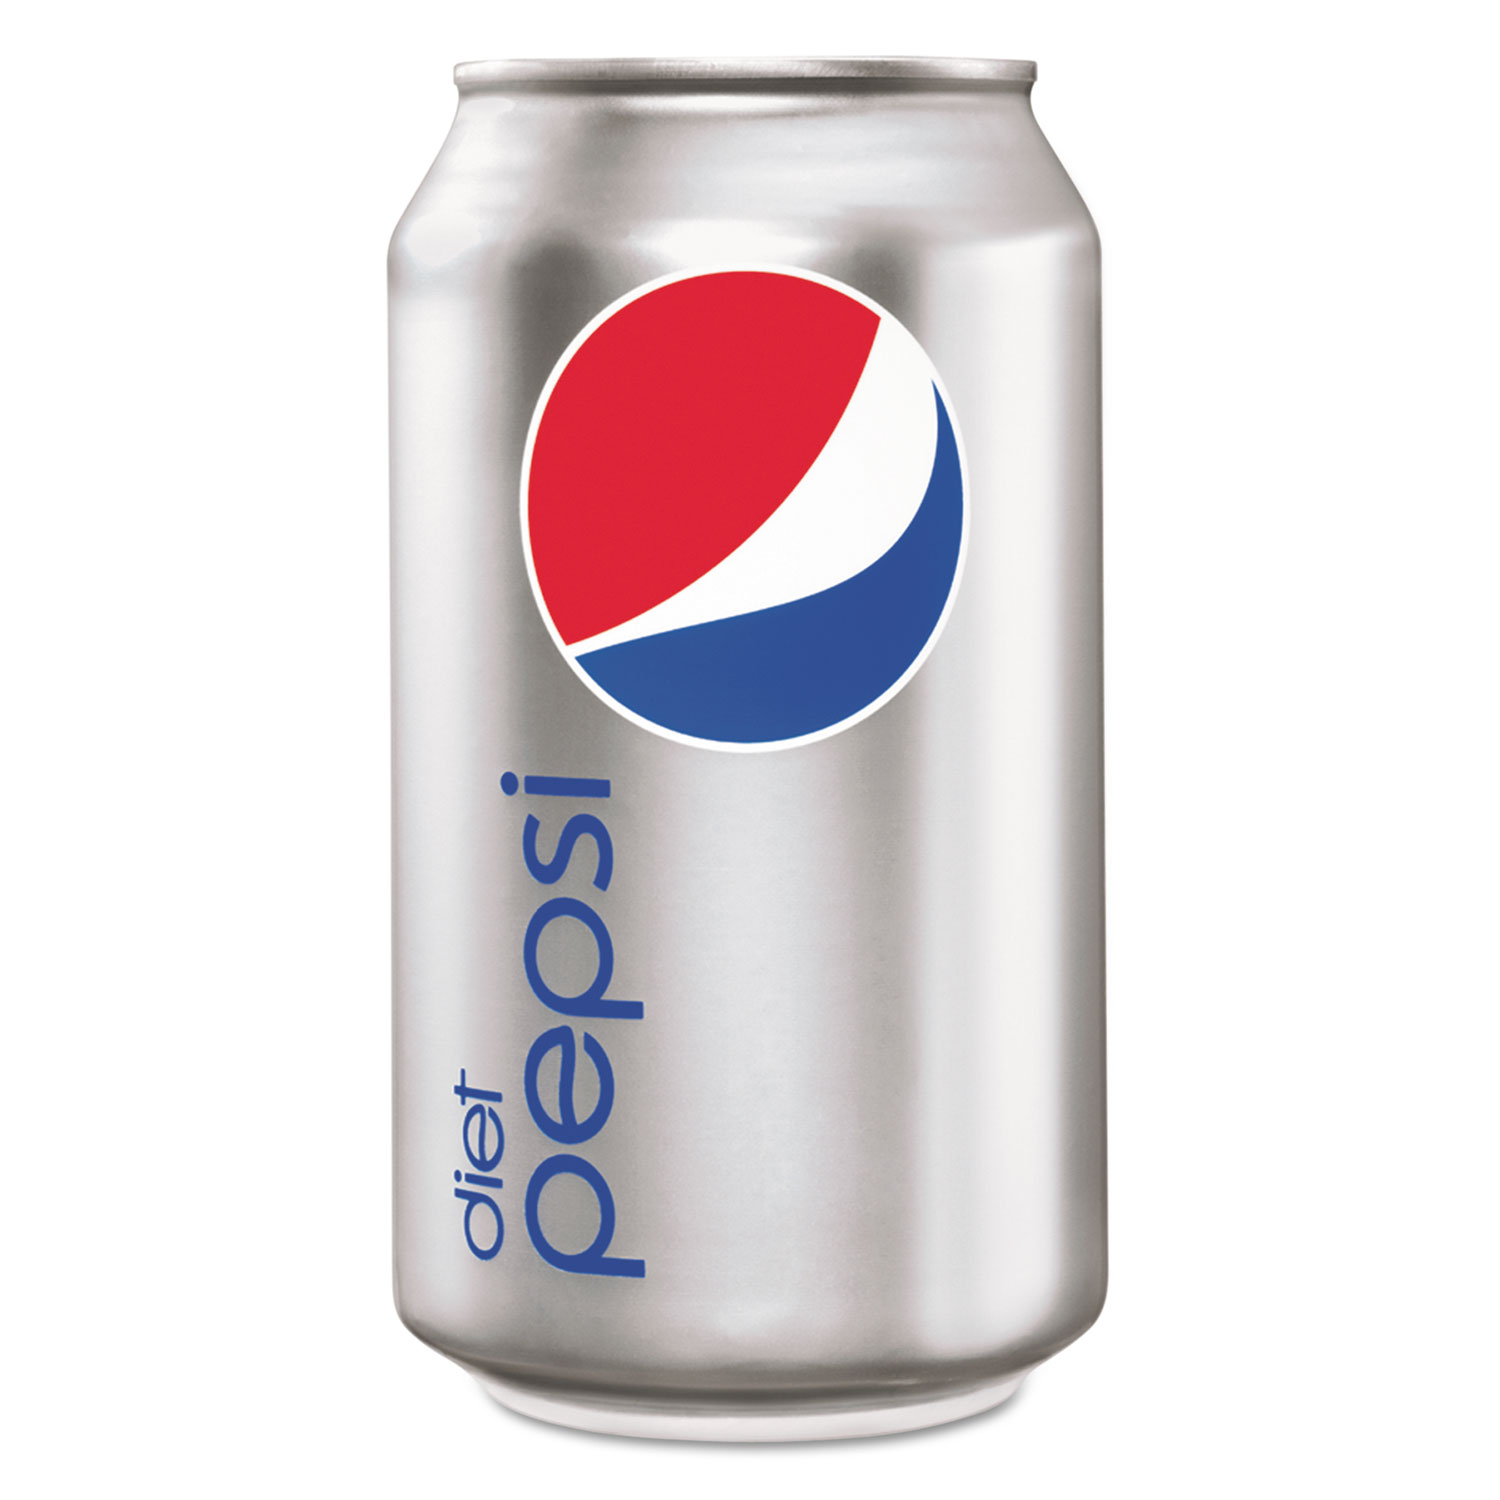  Pepsi 012000809958 Diet Cola, 12 oz Soda Can, 24/Pack (PEP09958) 